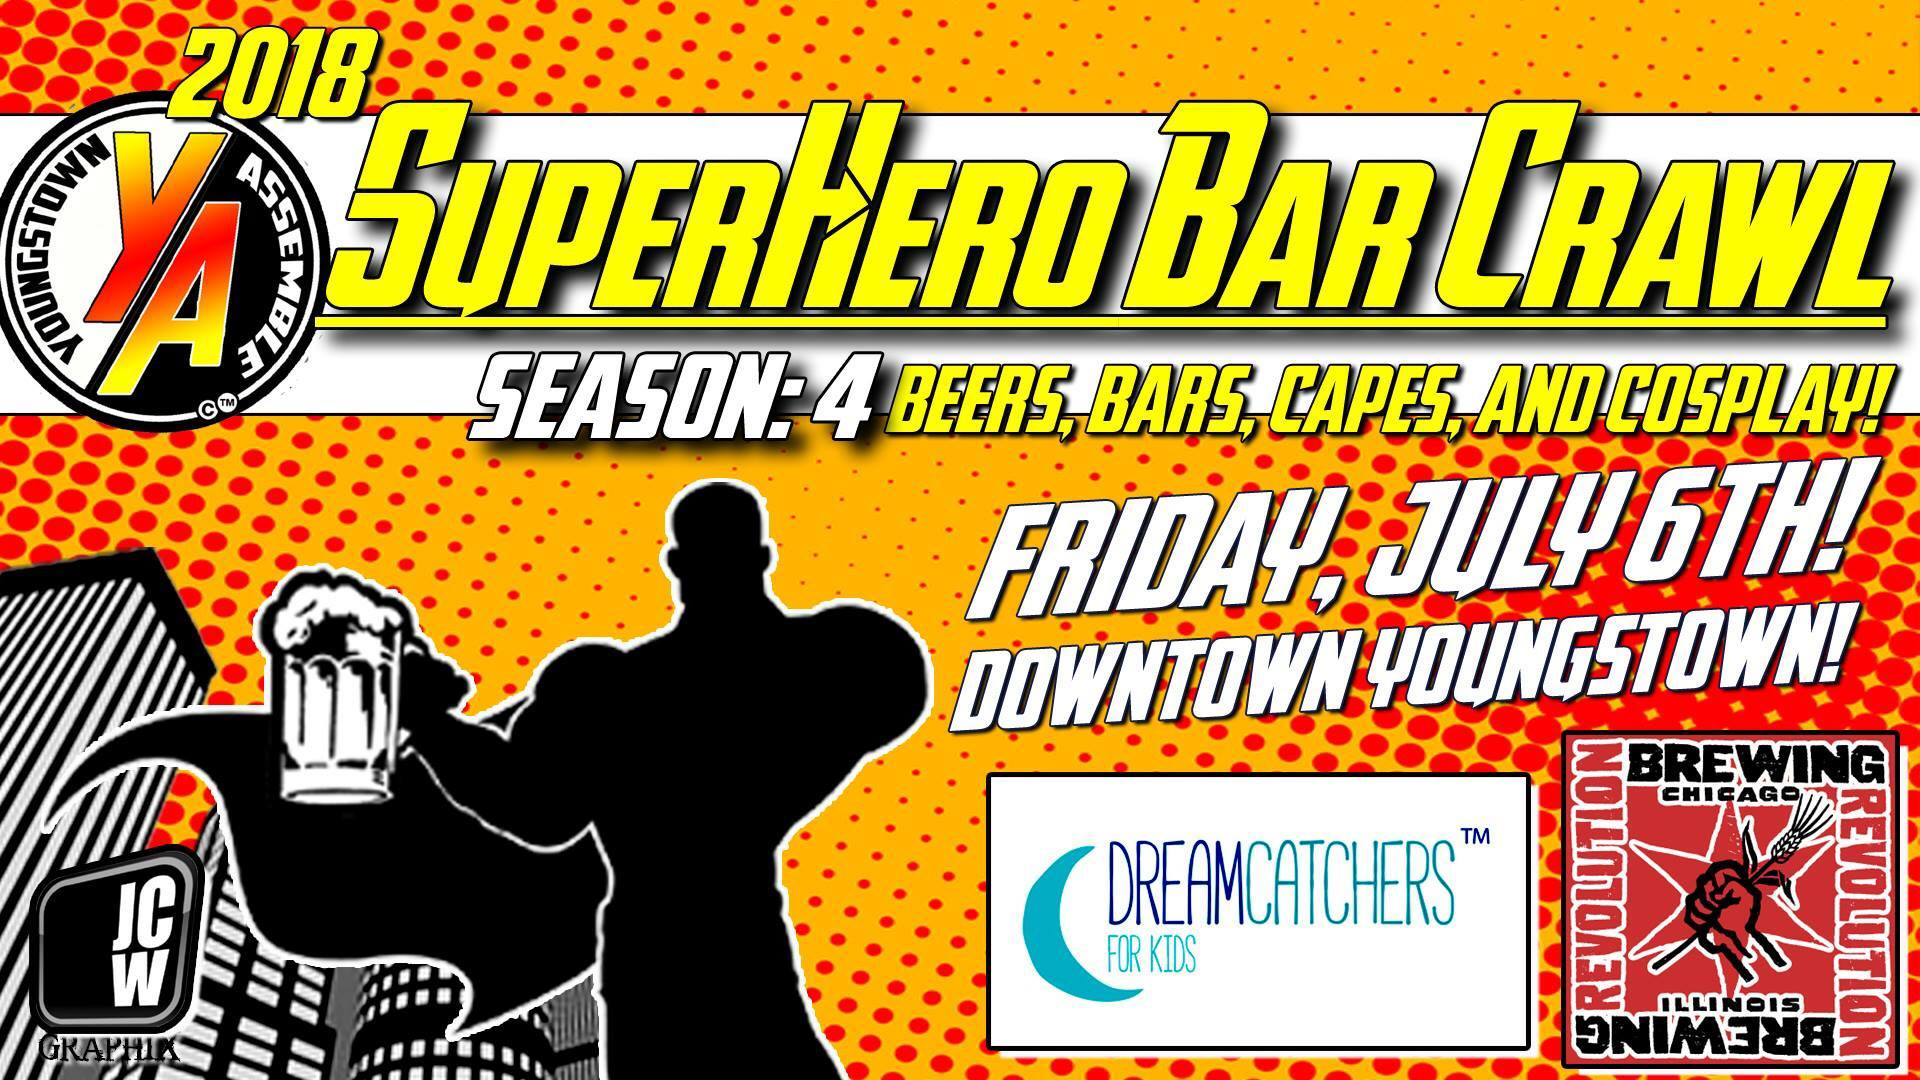 Super Hero Bar crawl Promo